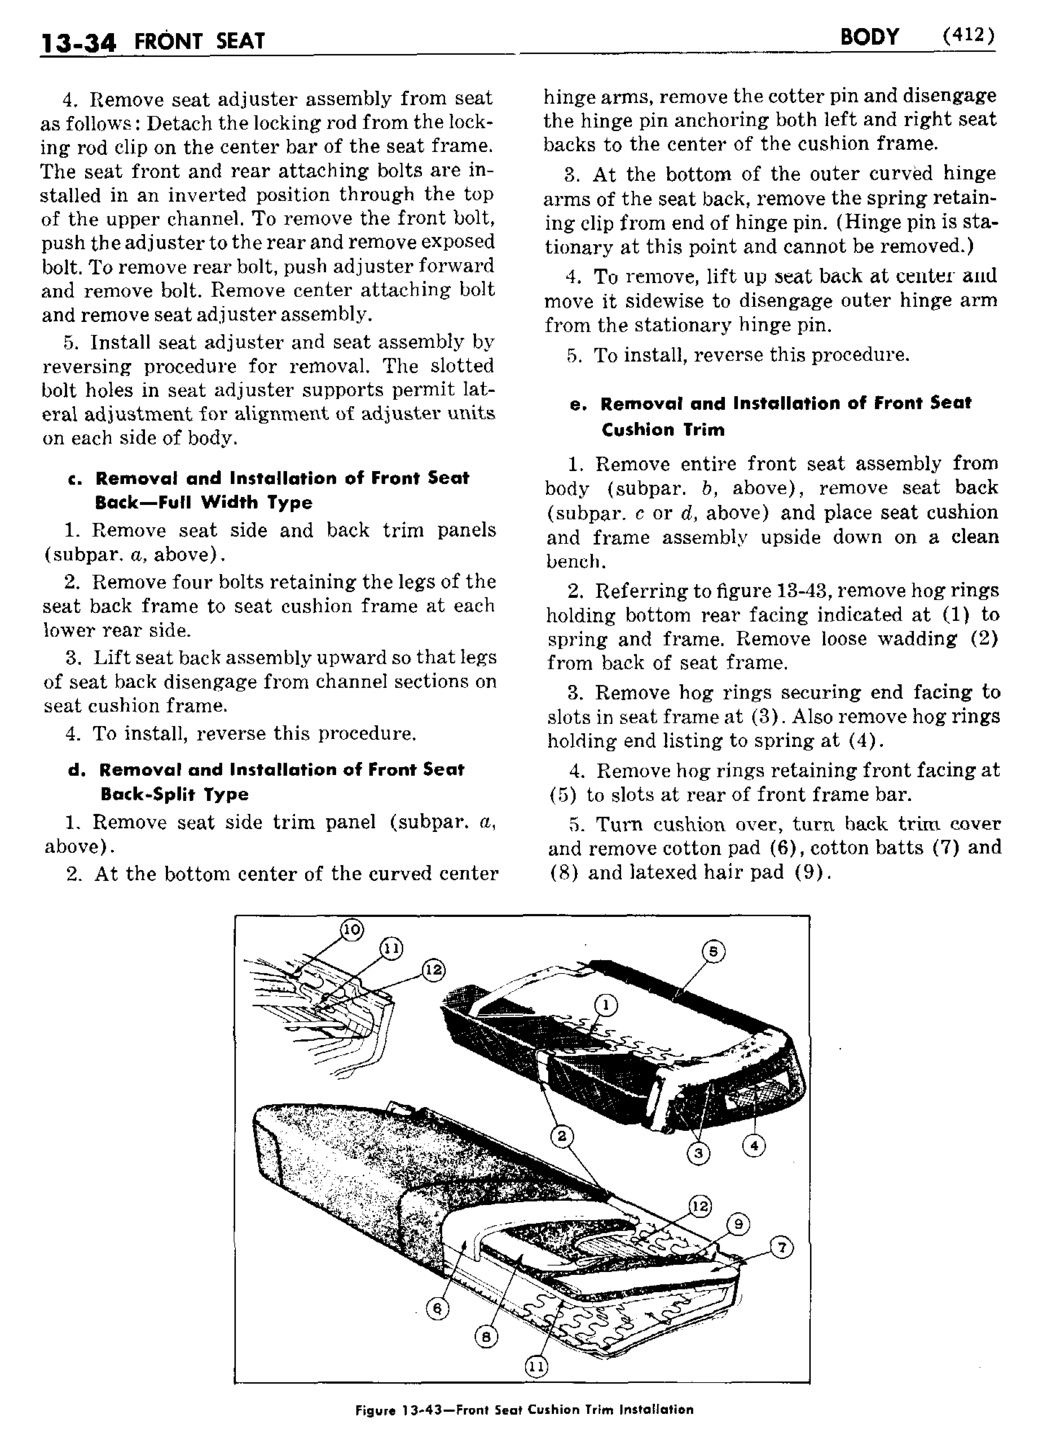 n_14 1950 Buick Shop Manual - Body-034-034.jpg